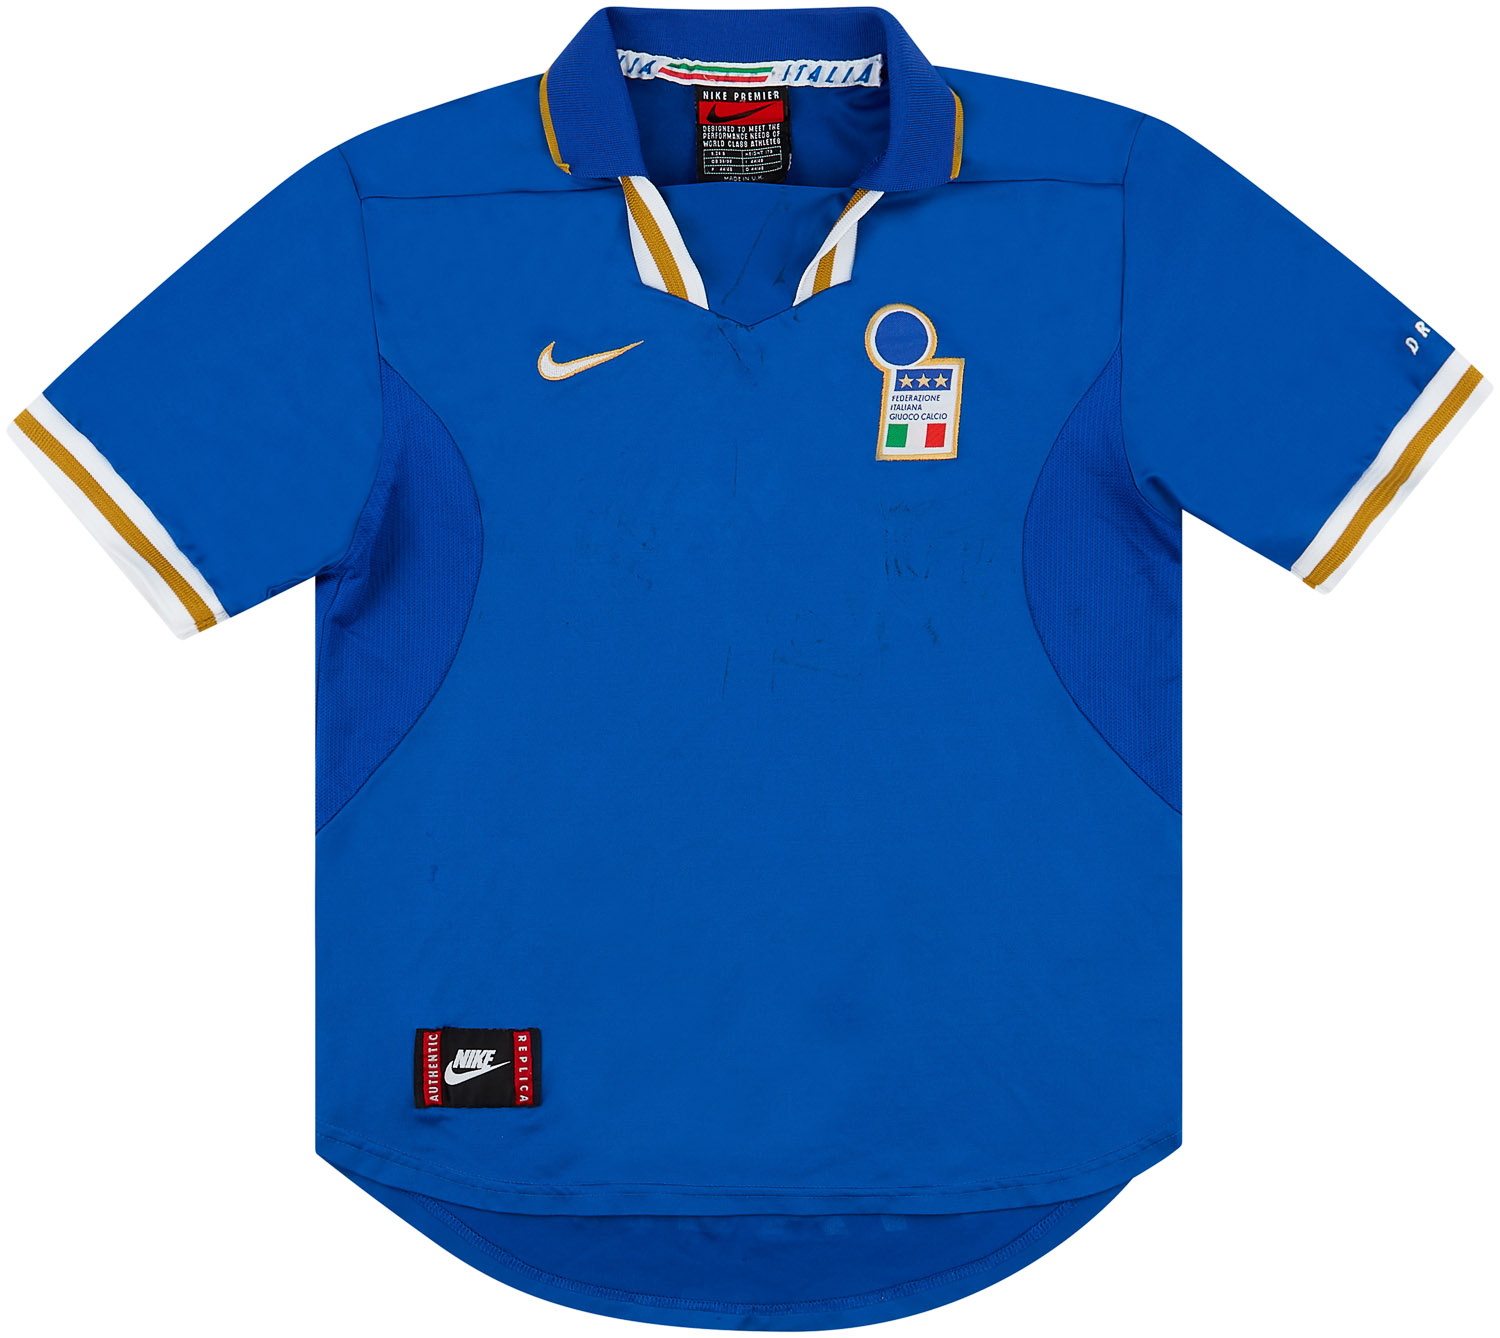 1996-97 Italy Home Shirt - 6/10 - ()